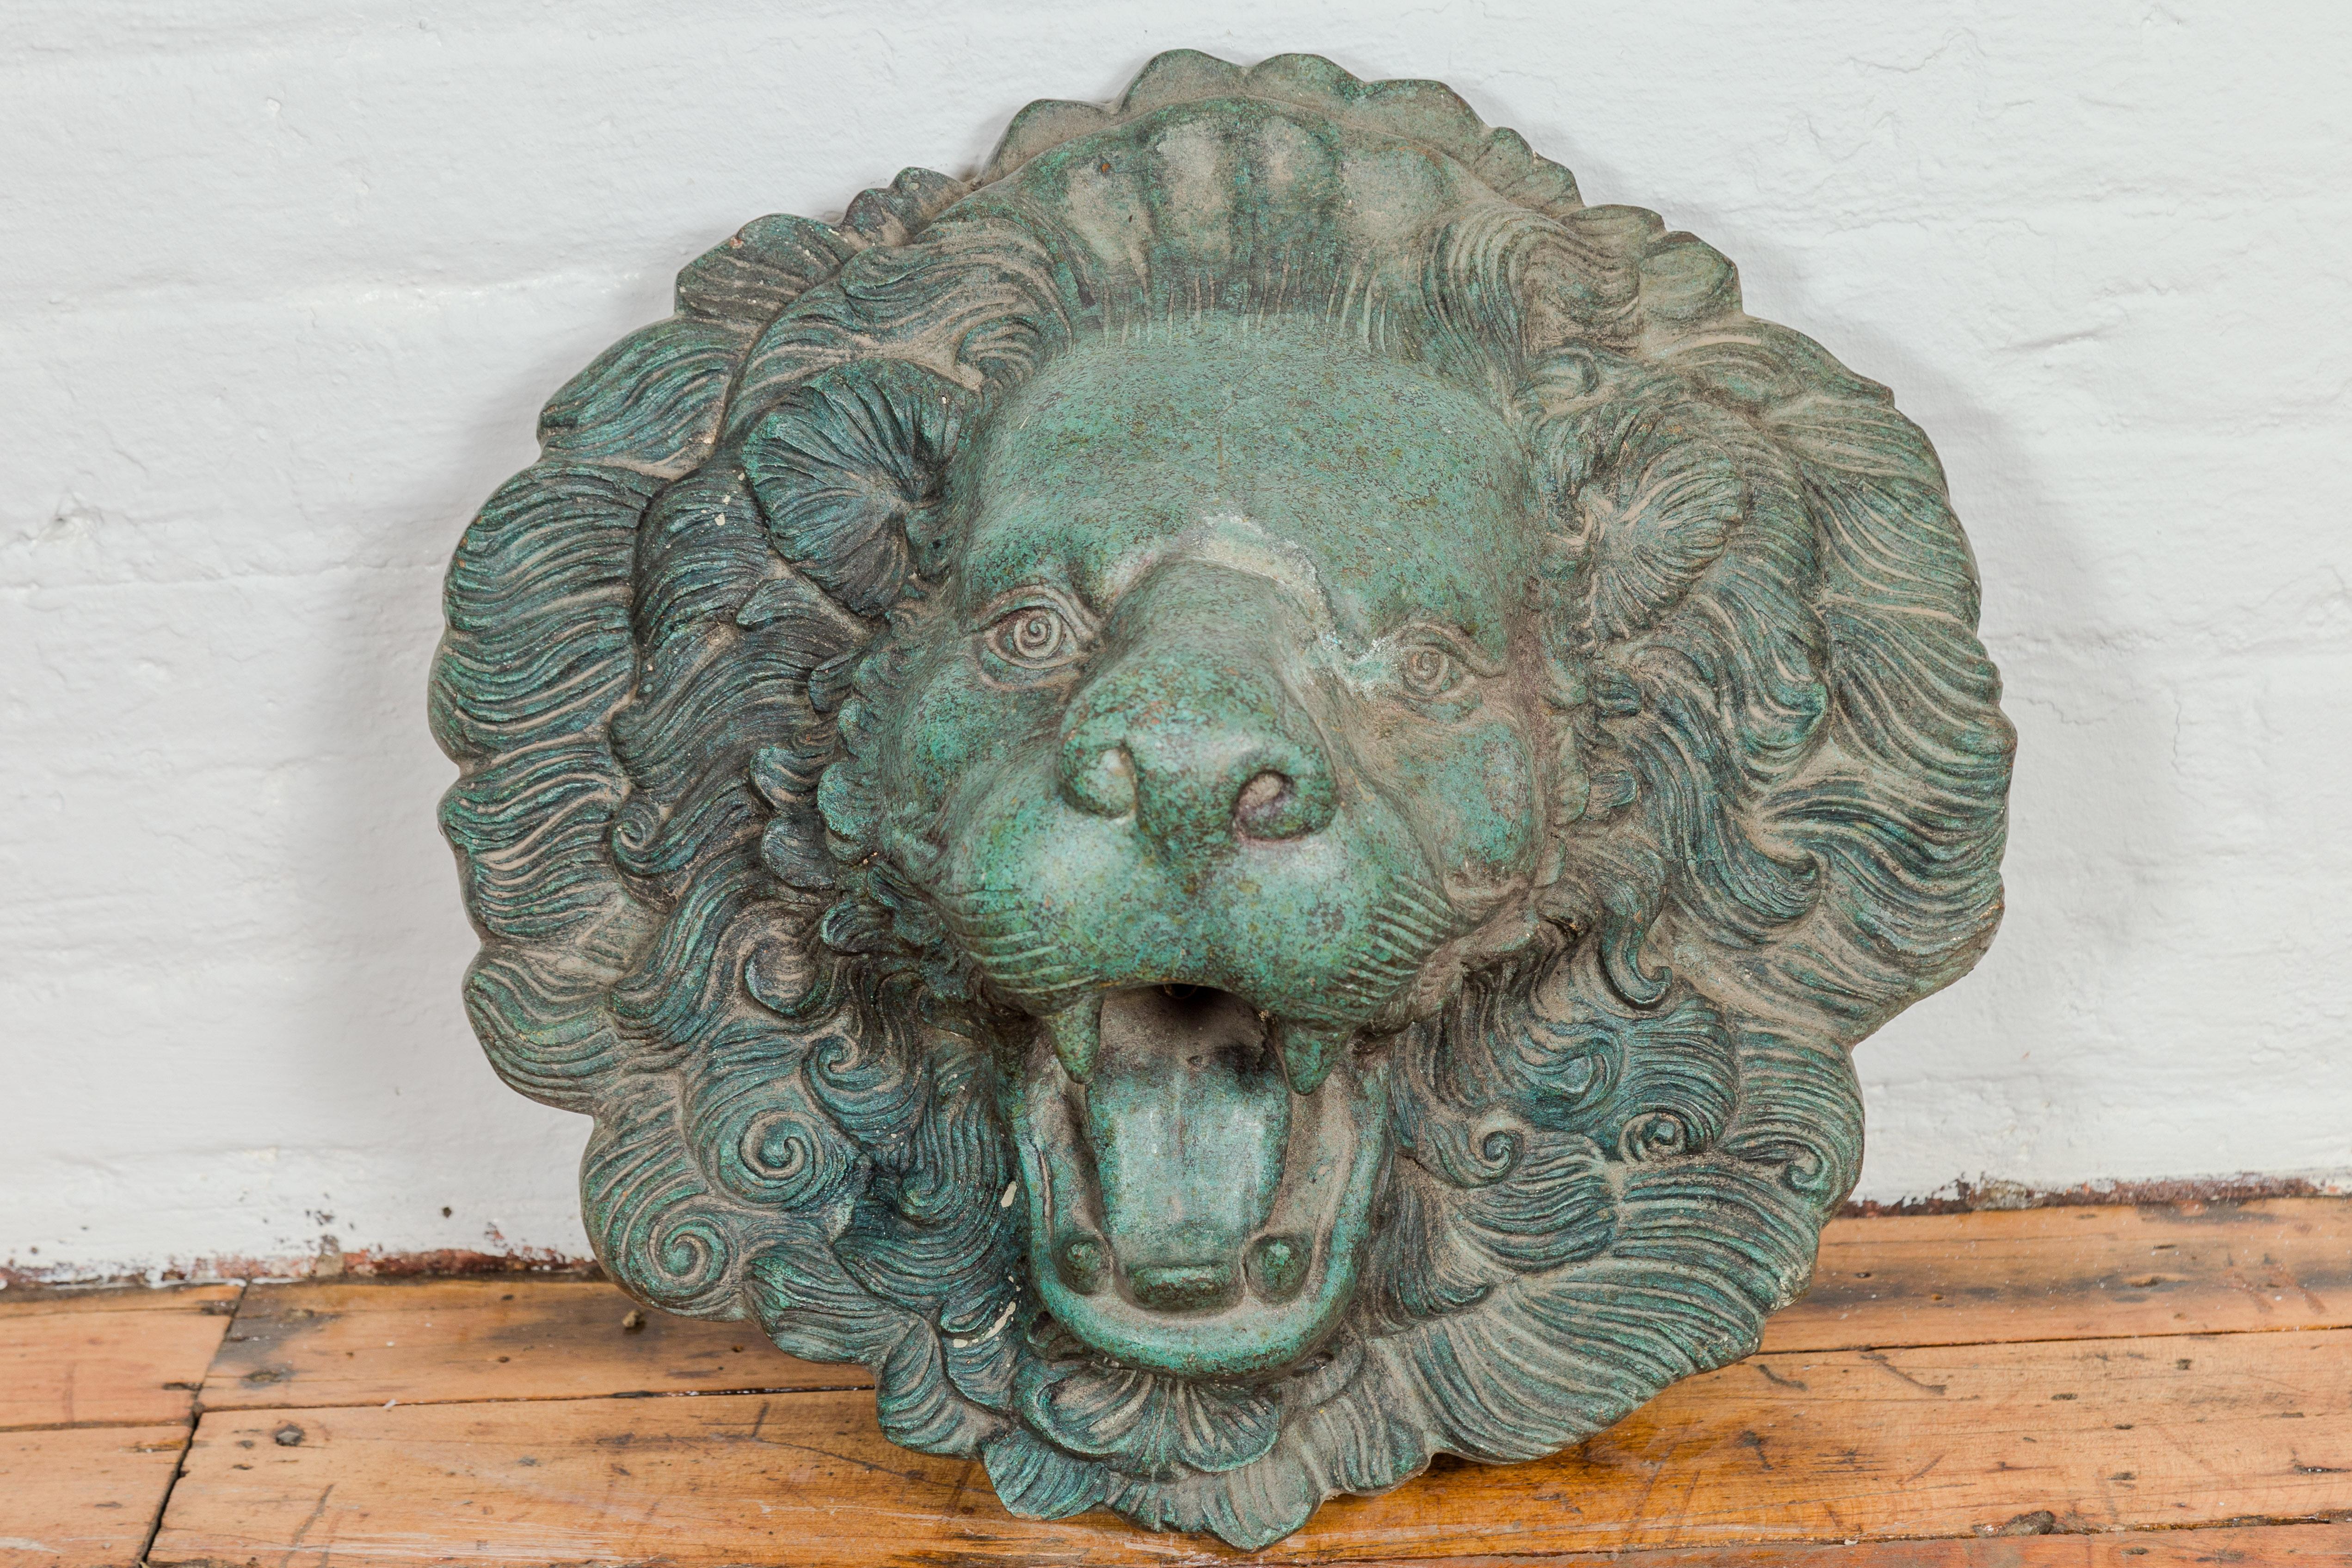 20th Century Heraldic Cast Bronze Lion Head Sculpture Tubed as a Fountain, Verdigris Patina